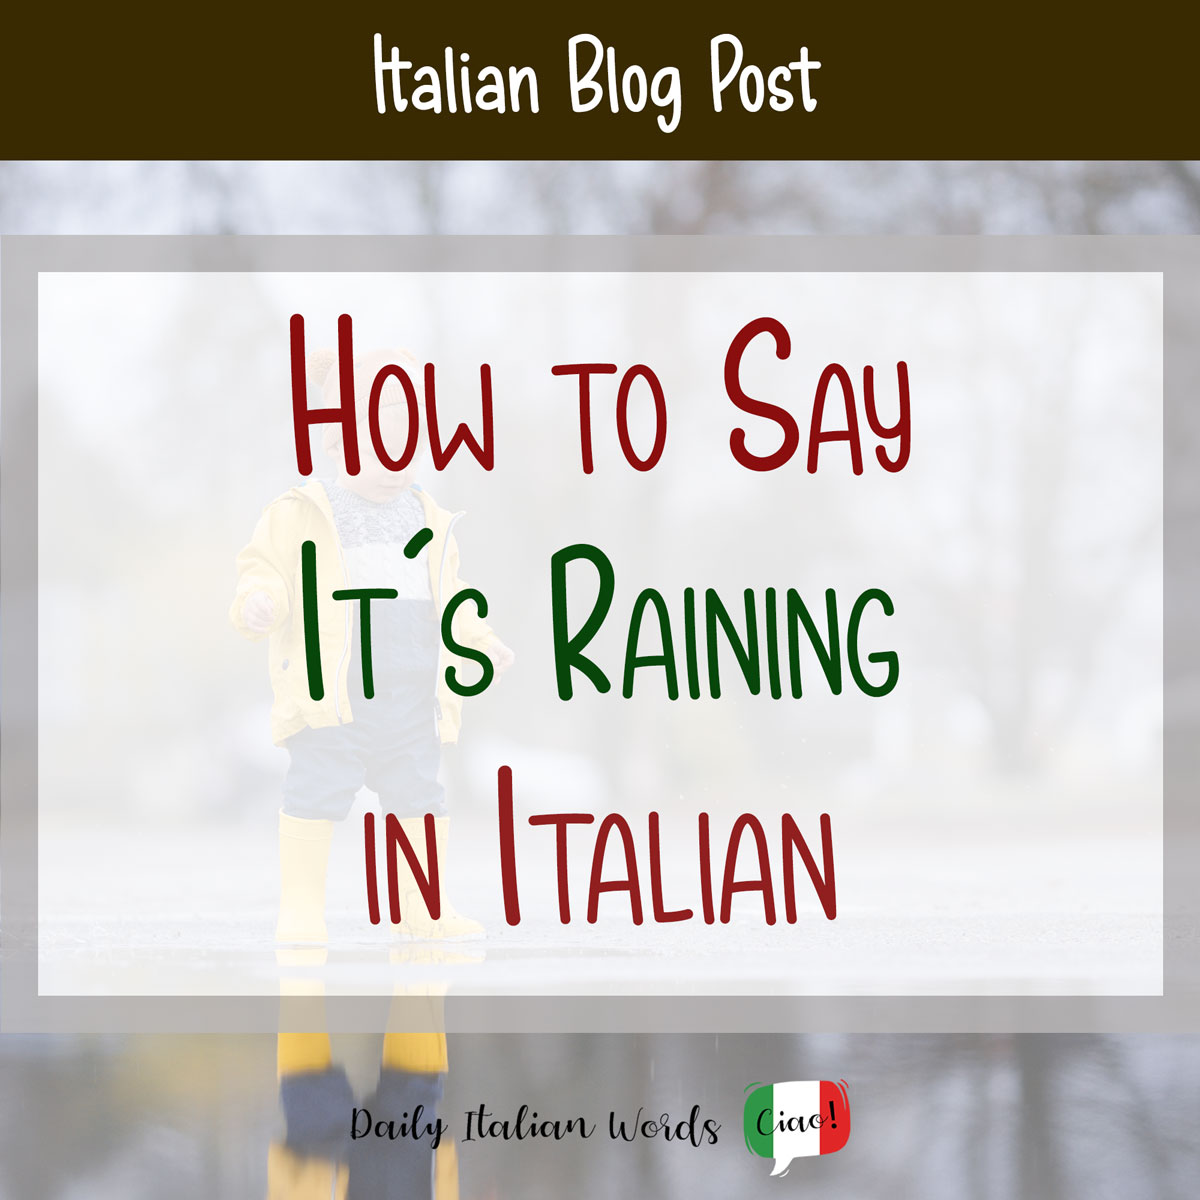 9 Ways to Say “It's Raining” in Italian